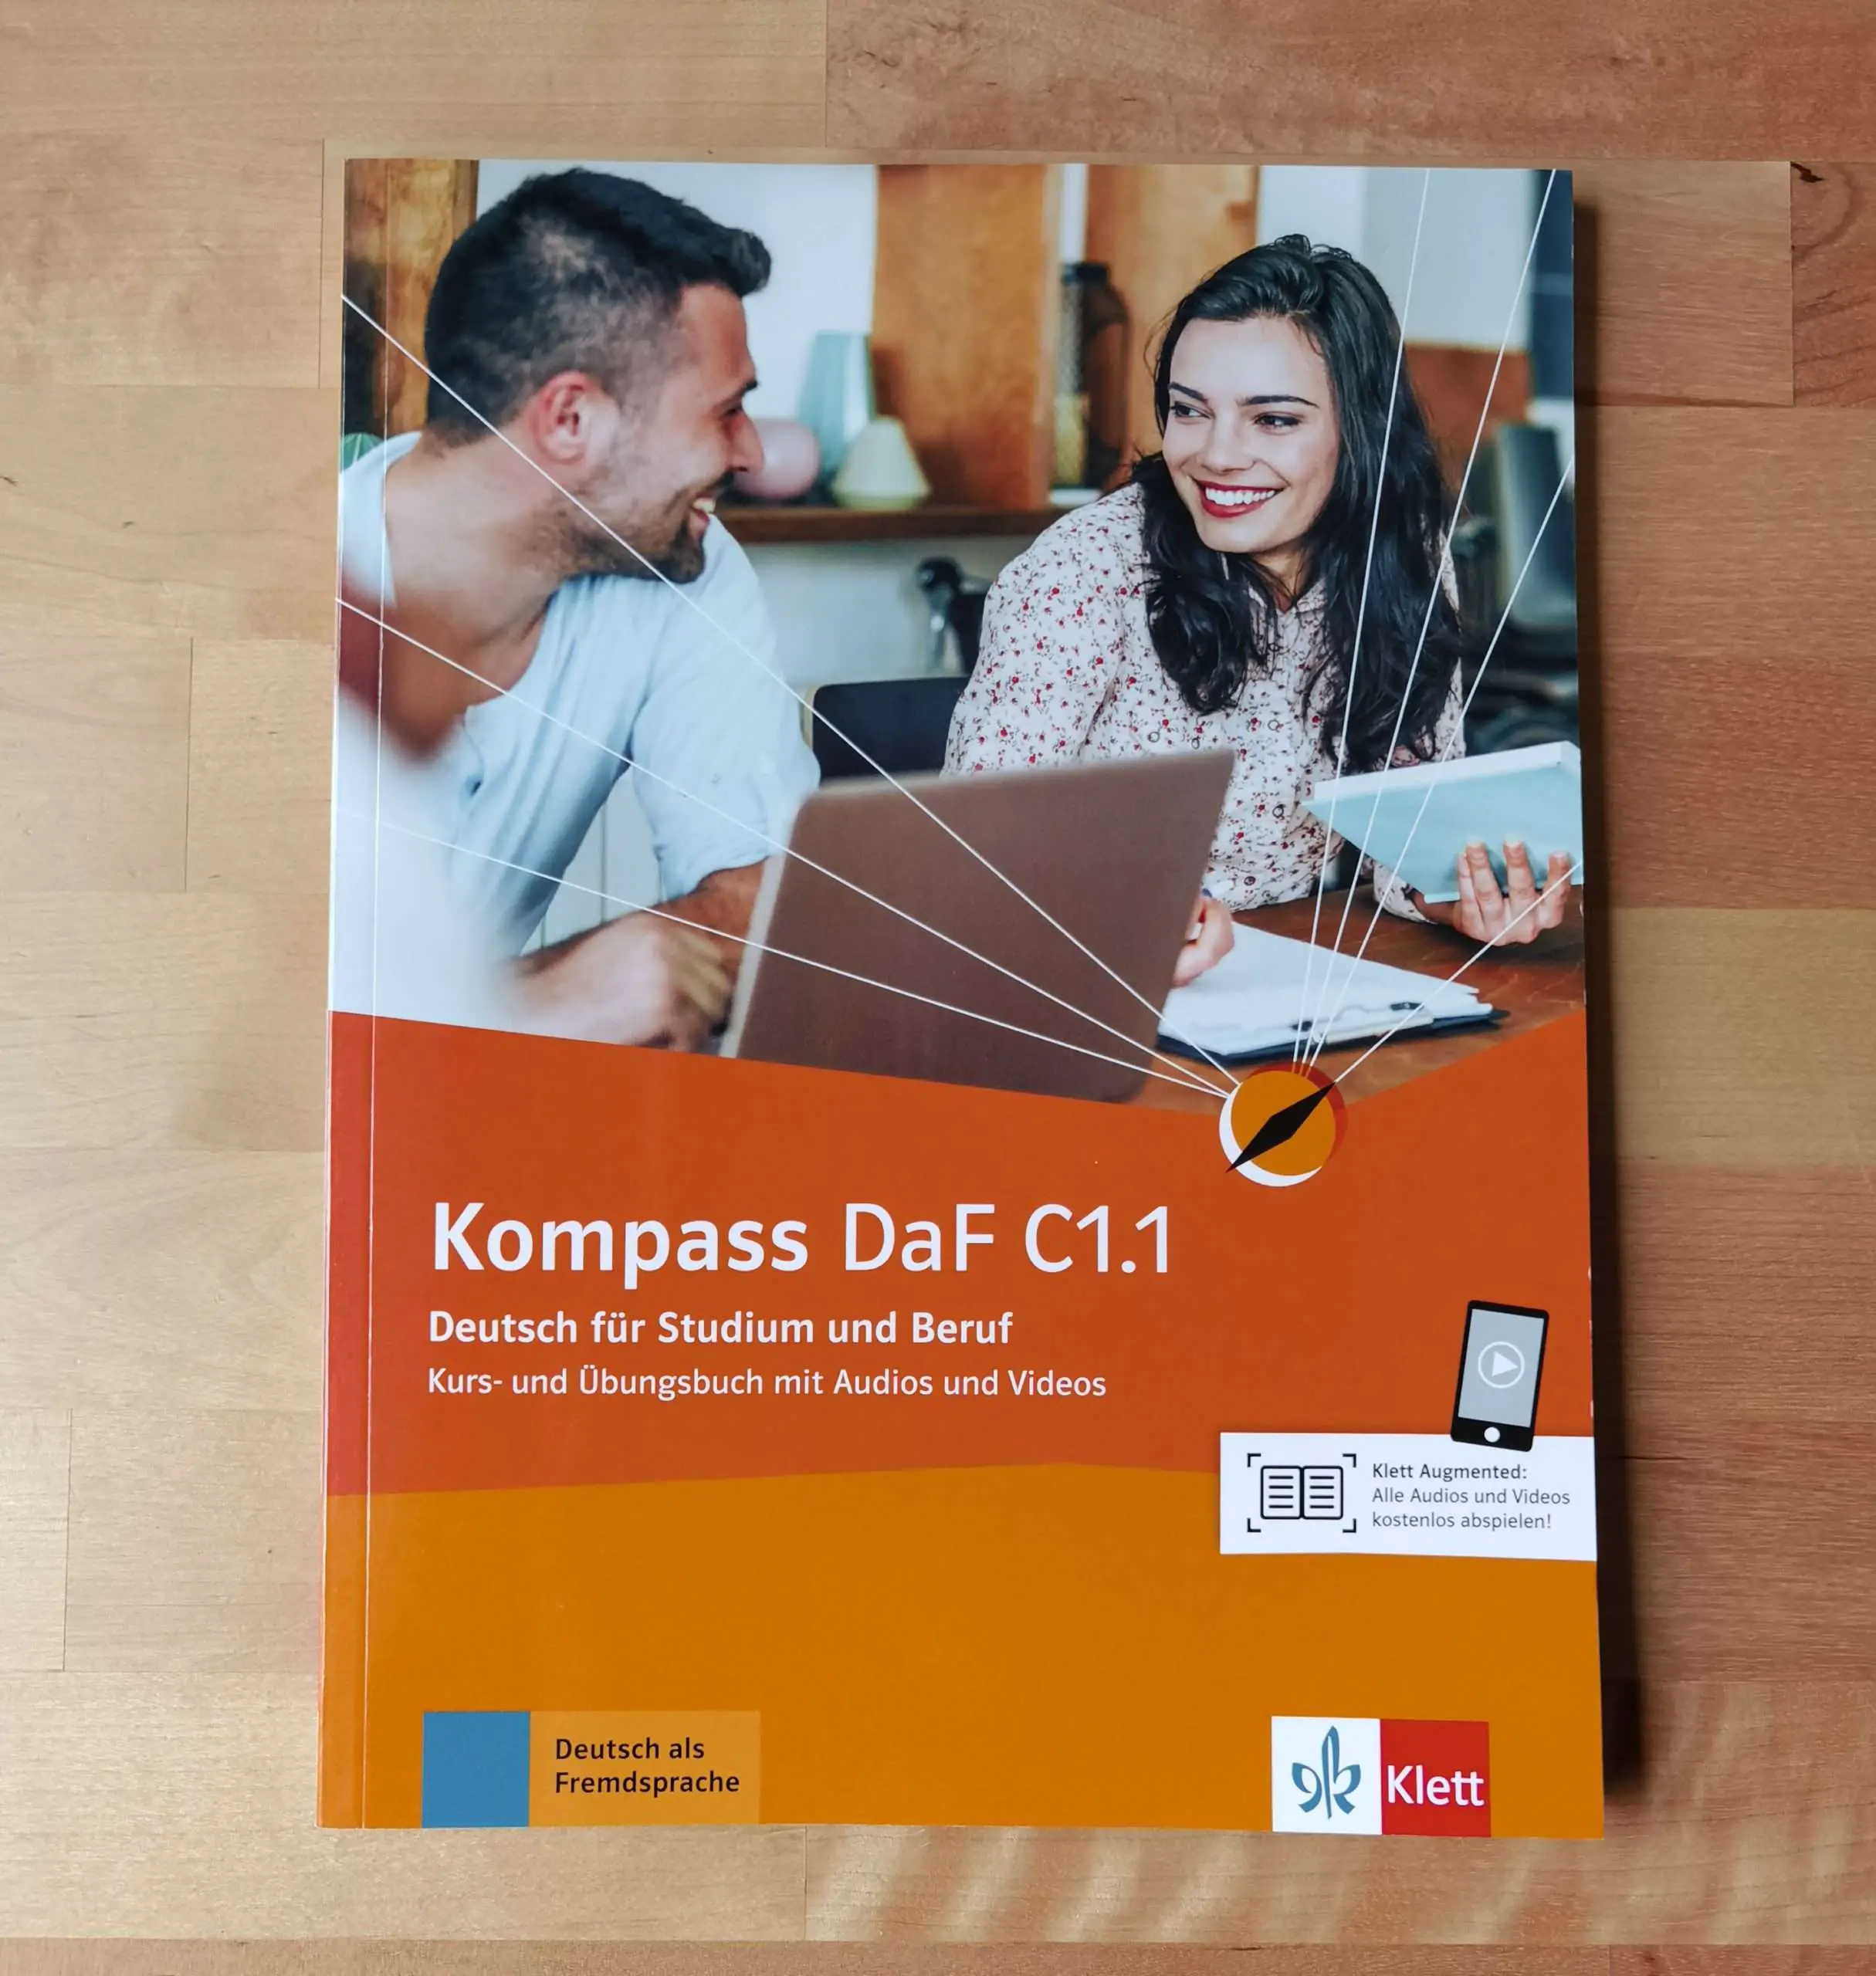 Kompass DaF C1.1 Klett Sprachen Verlag scaled